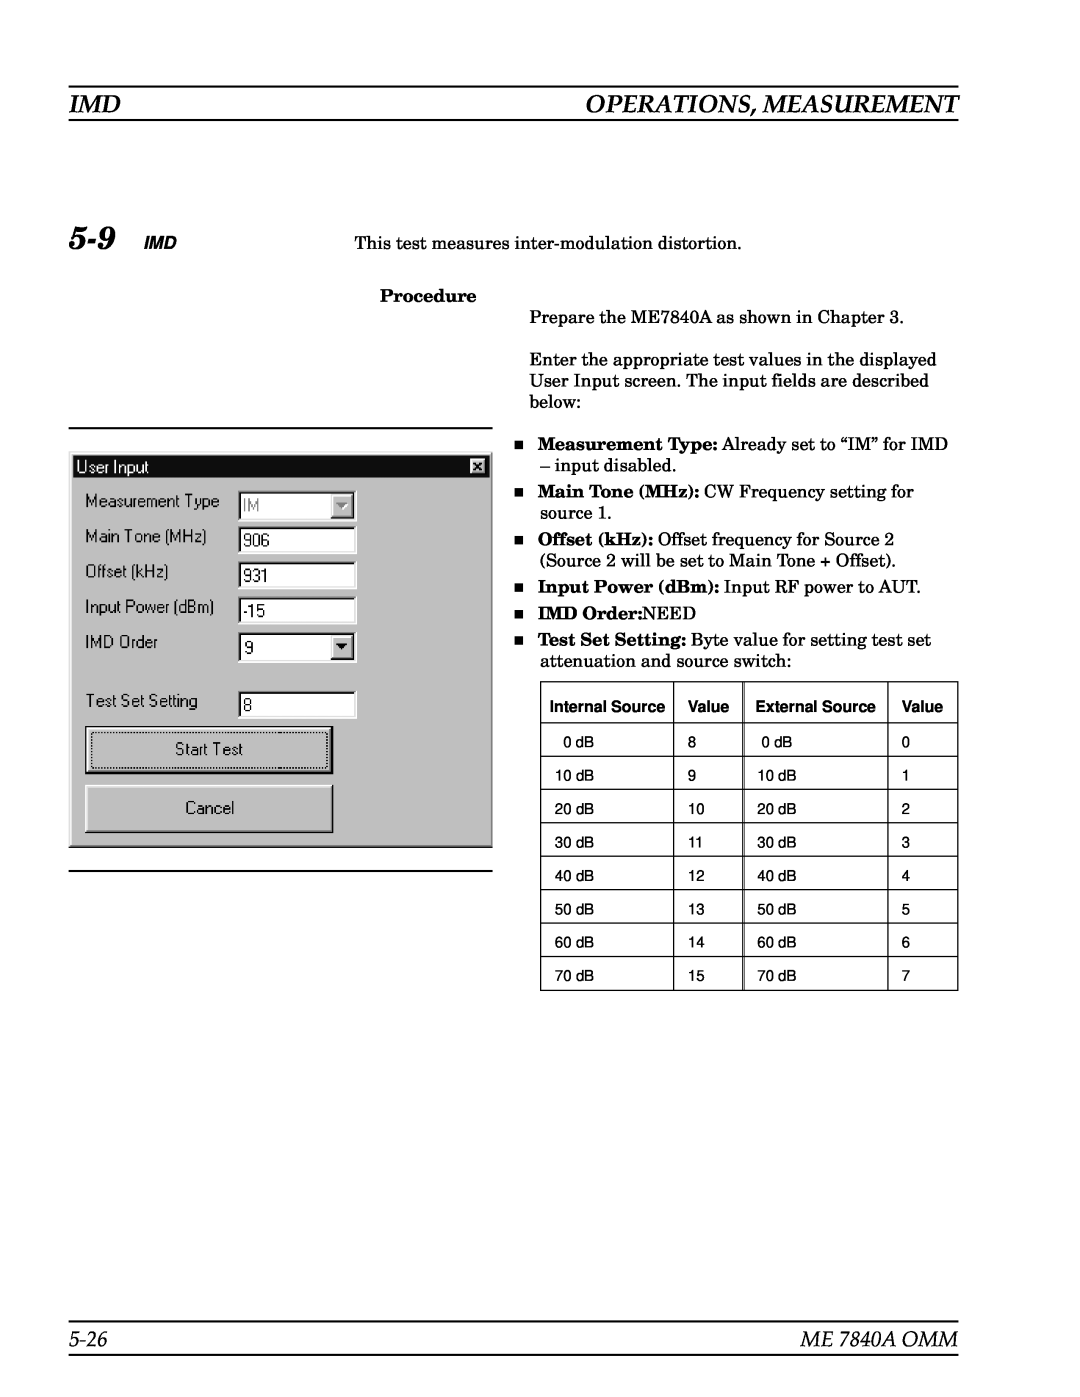 Anritsu ME7840A manual 5-9 IMD, 5-26, Operations, Measurement, ME 7840A OMM, Procedure, IMD Order NEED 